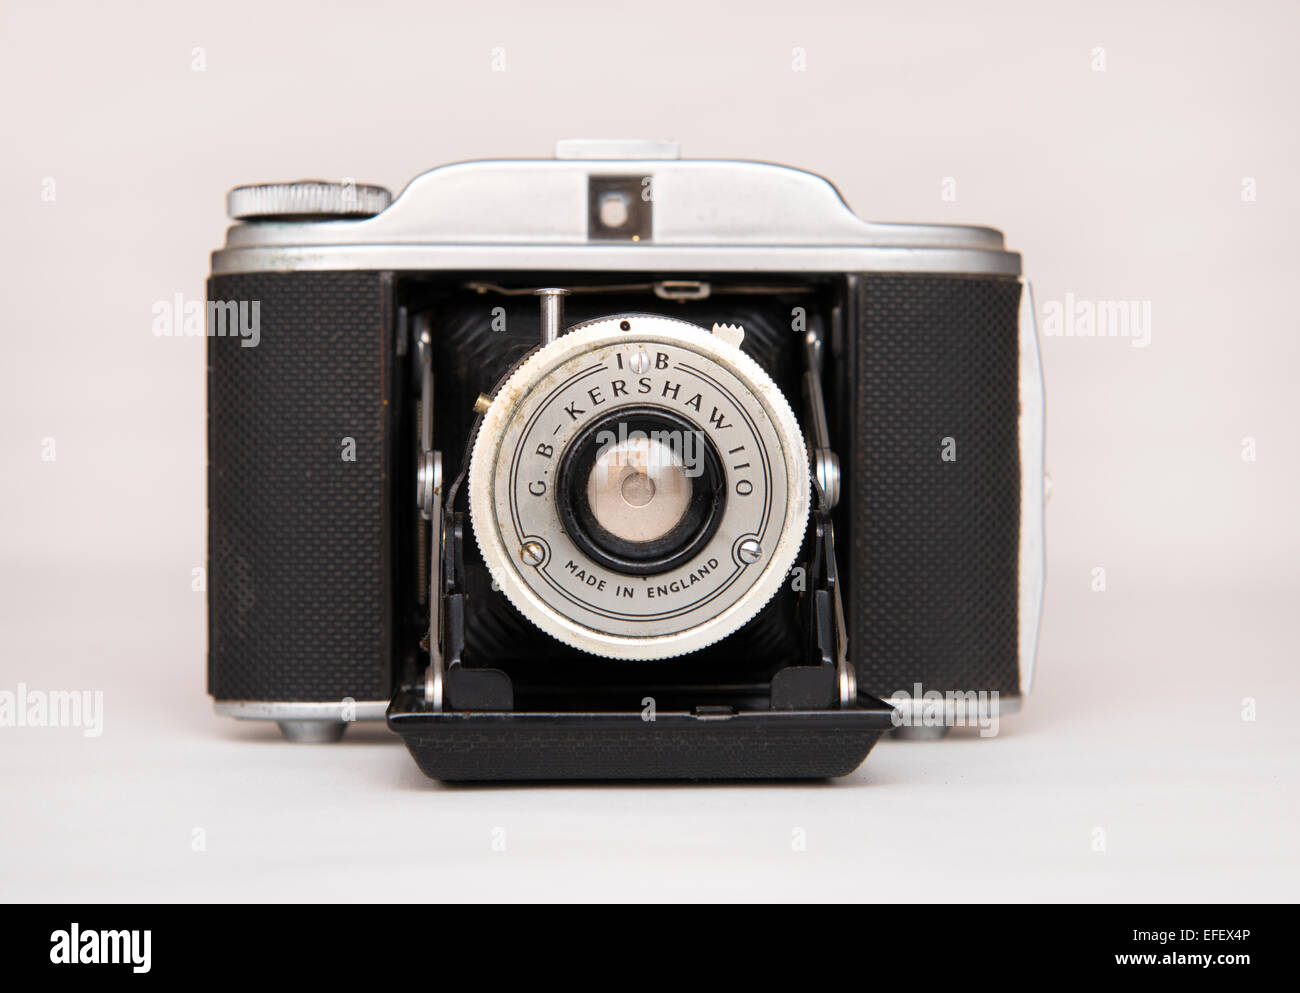 Kershaw 110 fotocamera di piegatura, prima realizzata nel 1954 dal G B Kershaw di Leeds in Inghilterra. Foto Stock